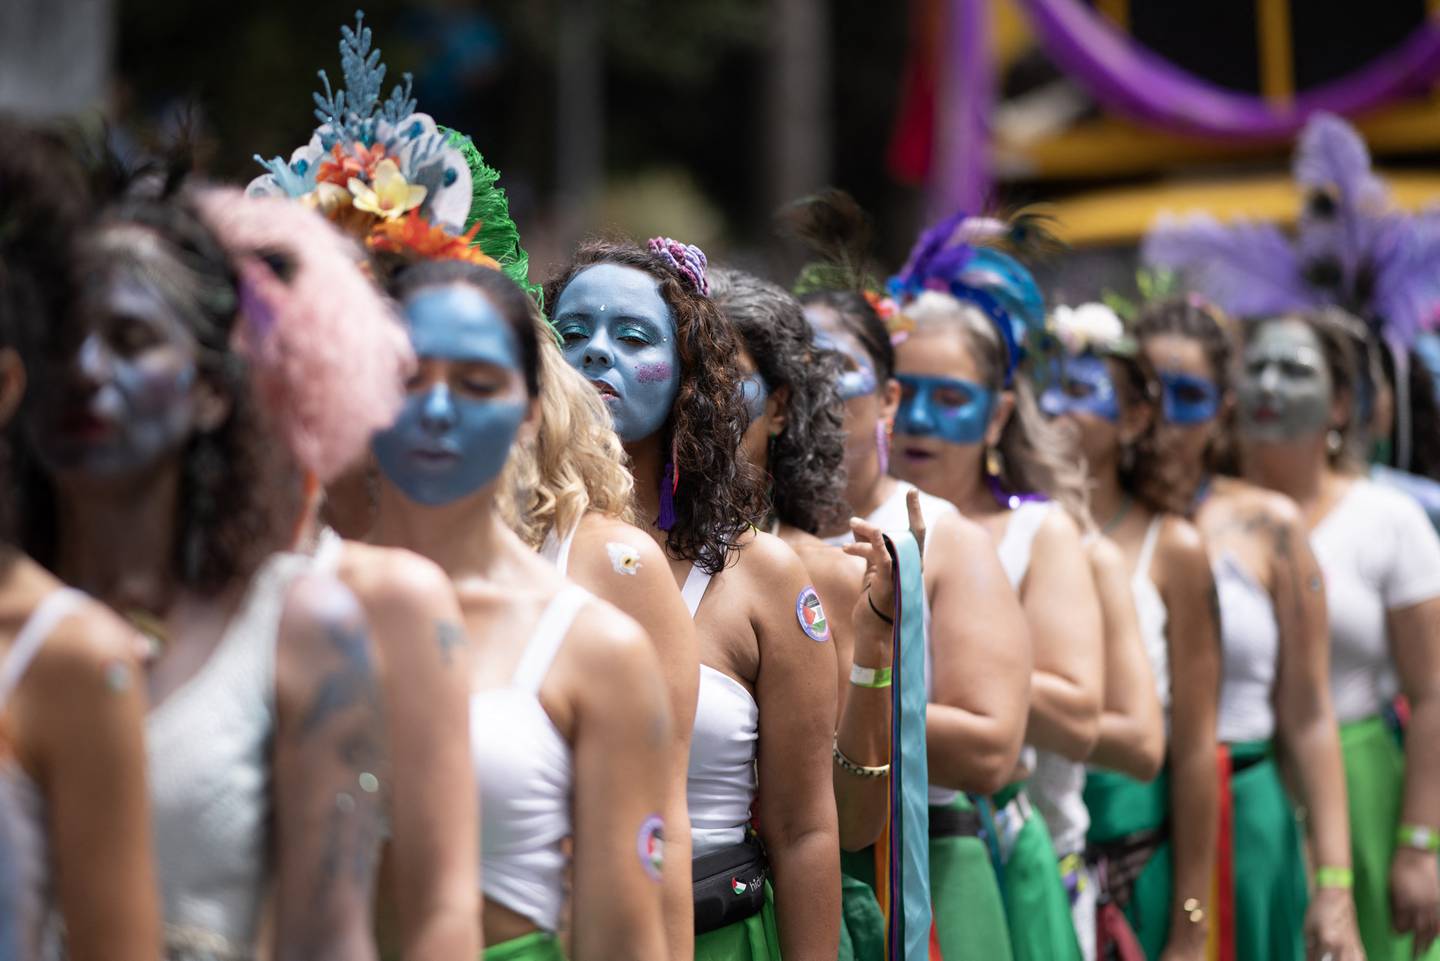 Miembros del grupo tradicional de carnaval Peña de Pavao de Krishna actúan en Belo Horizonte, Brasil.